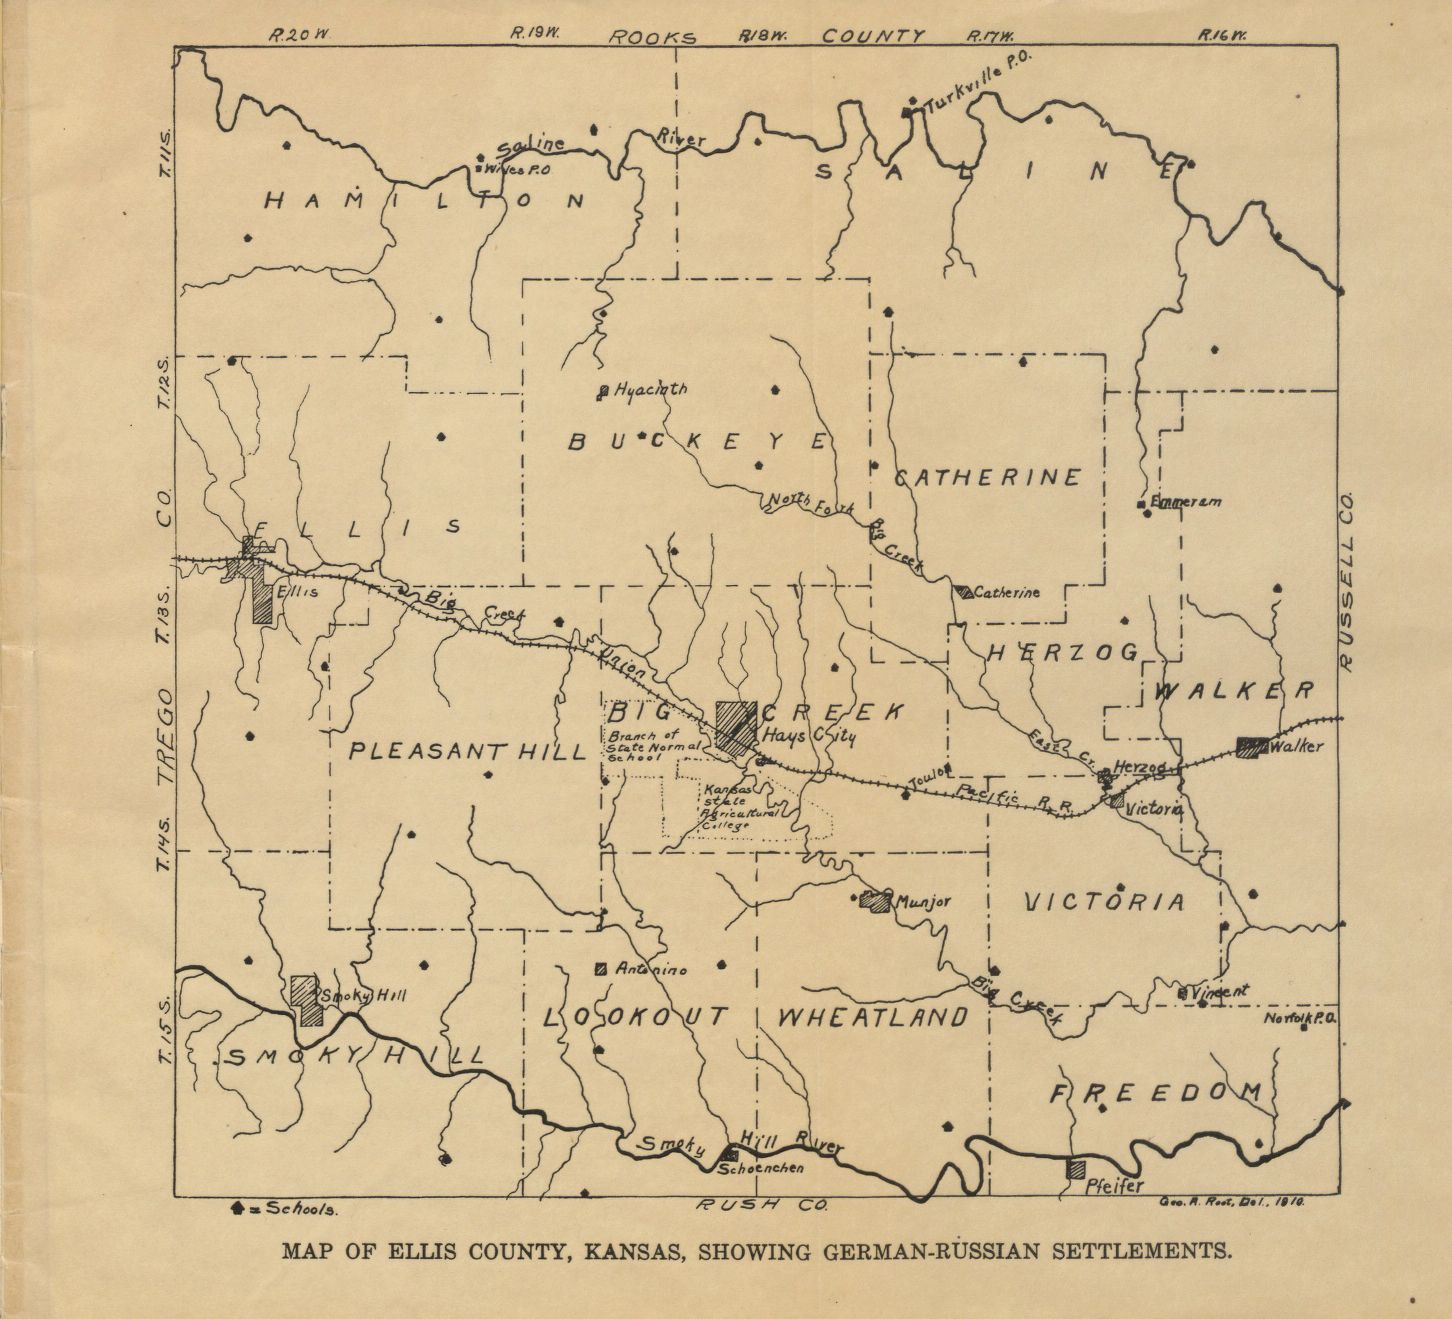 Map of Volga German Settlements in Ellis County, Kansas. Source: Francis Laing article, 1910.